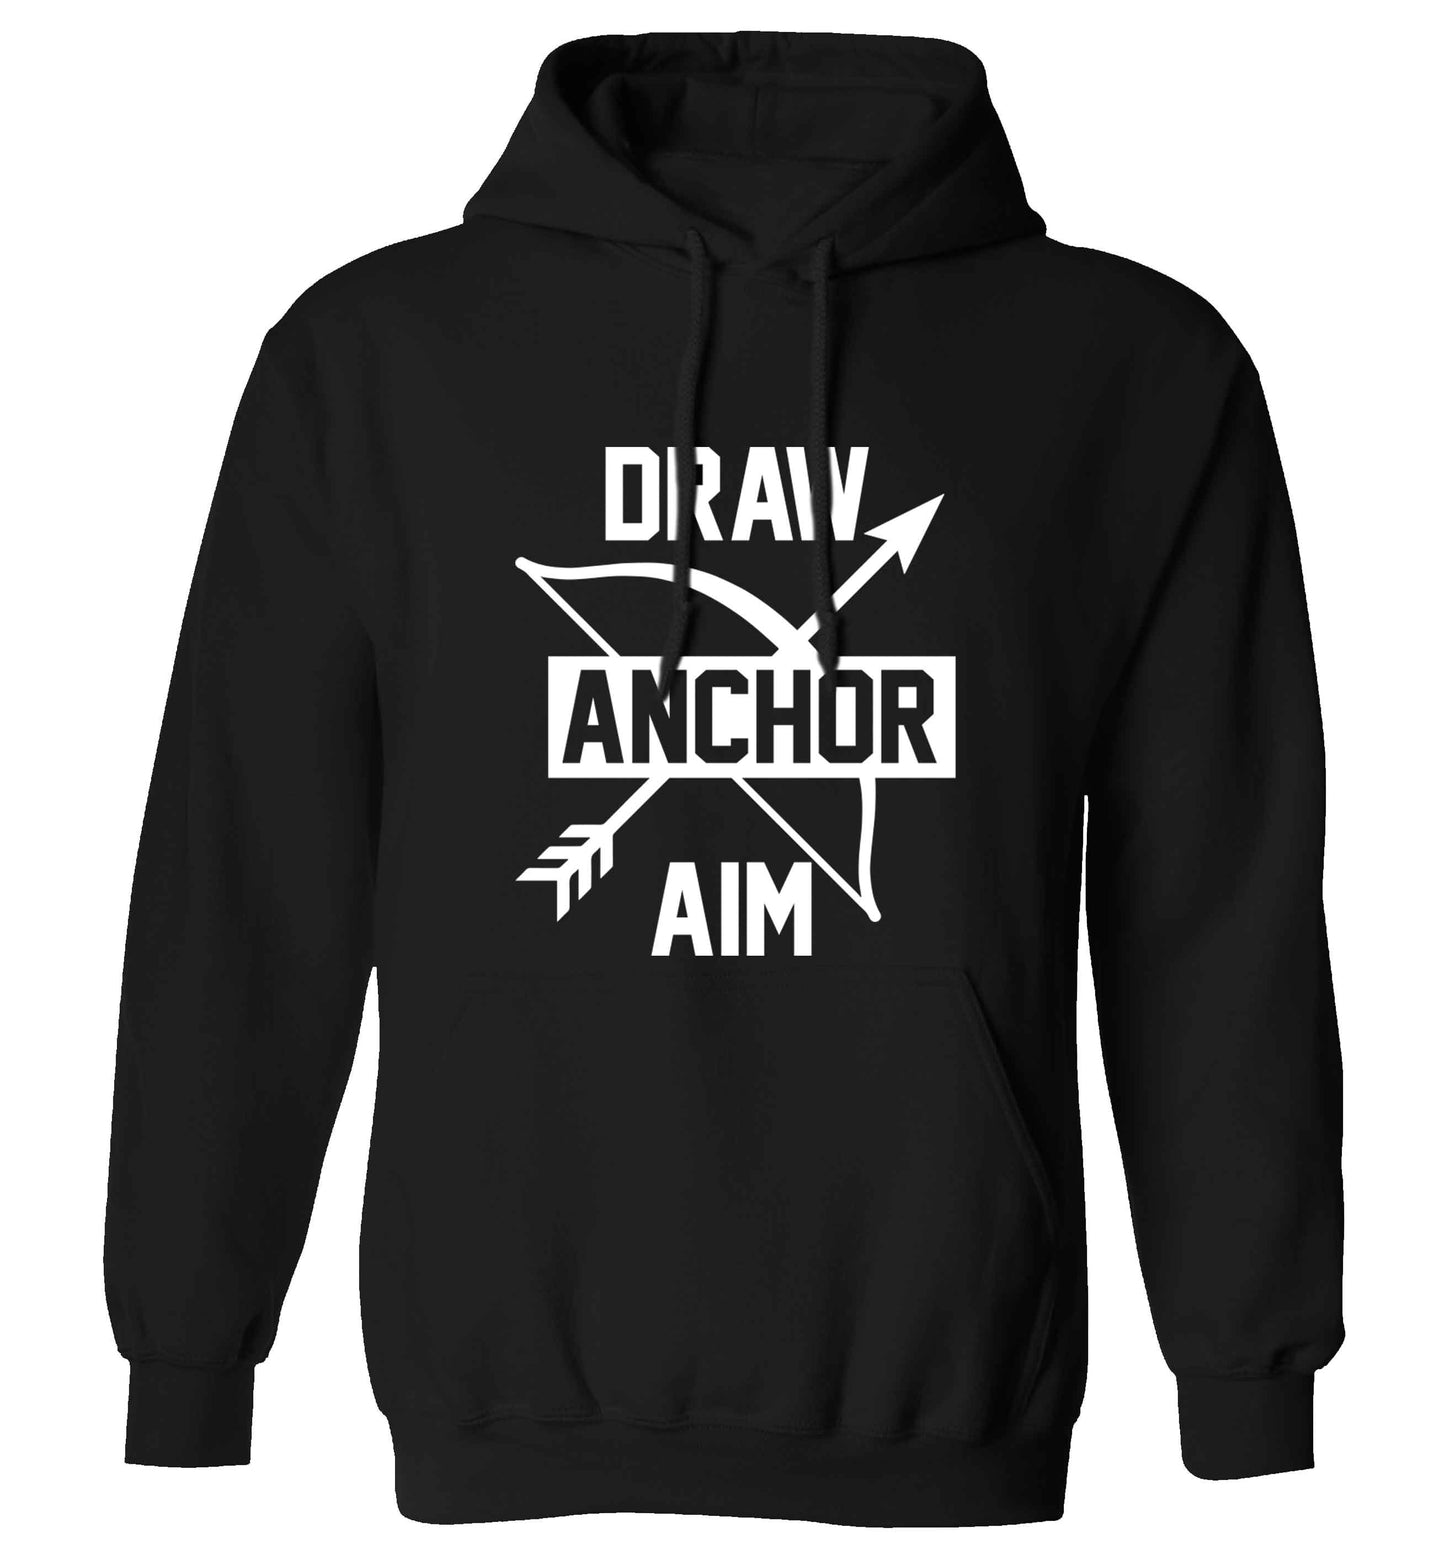 Draw anchor aim adults unisex black hoodie 2XL